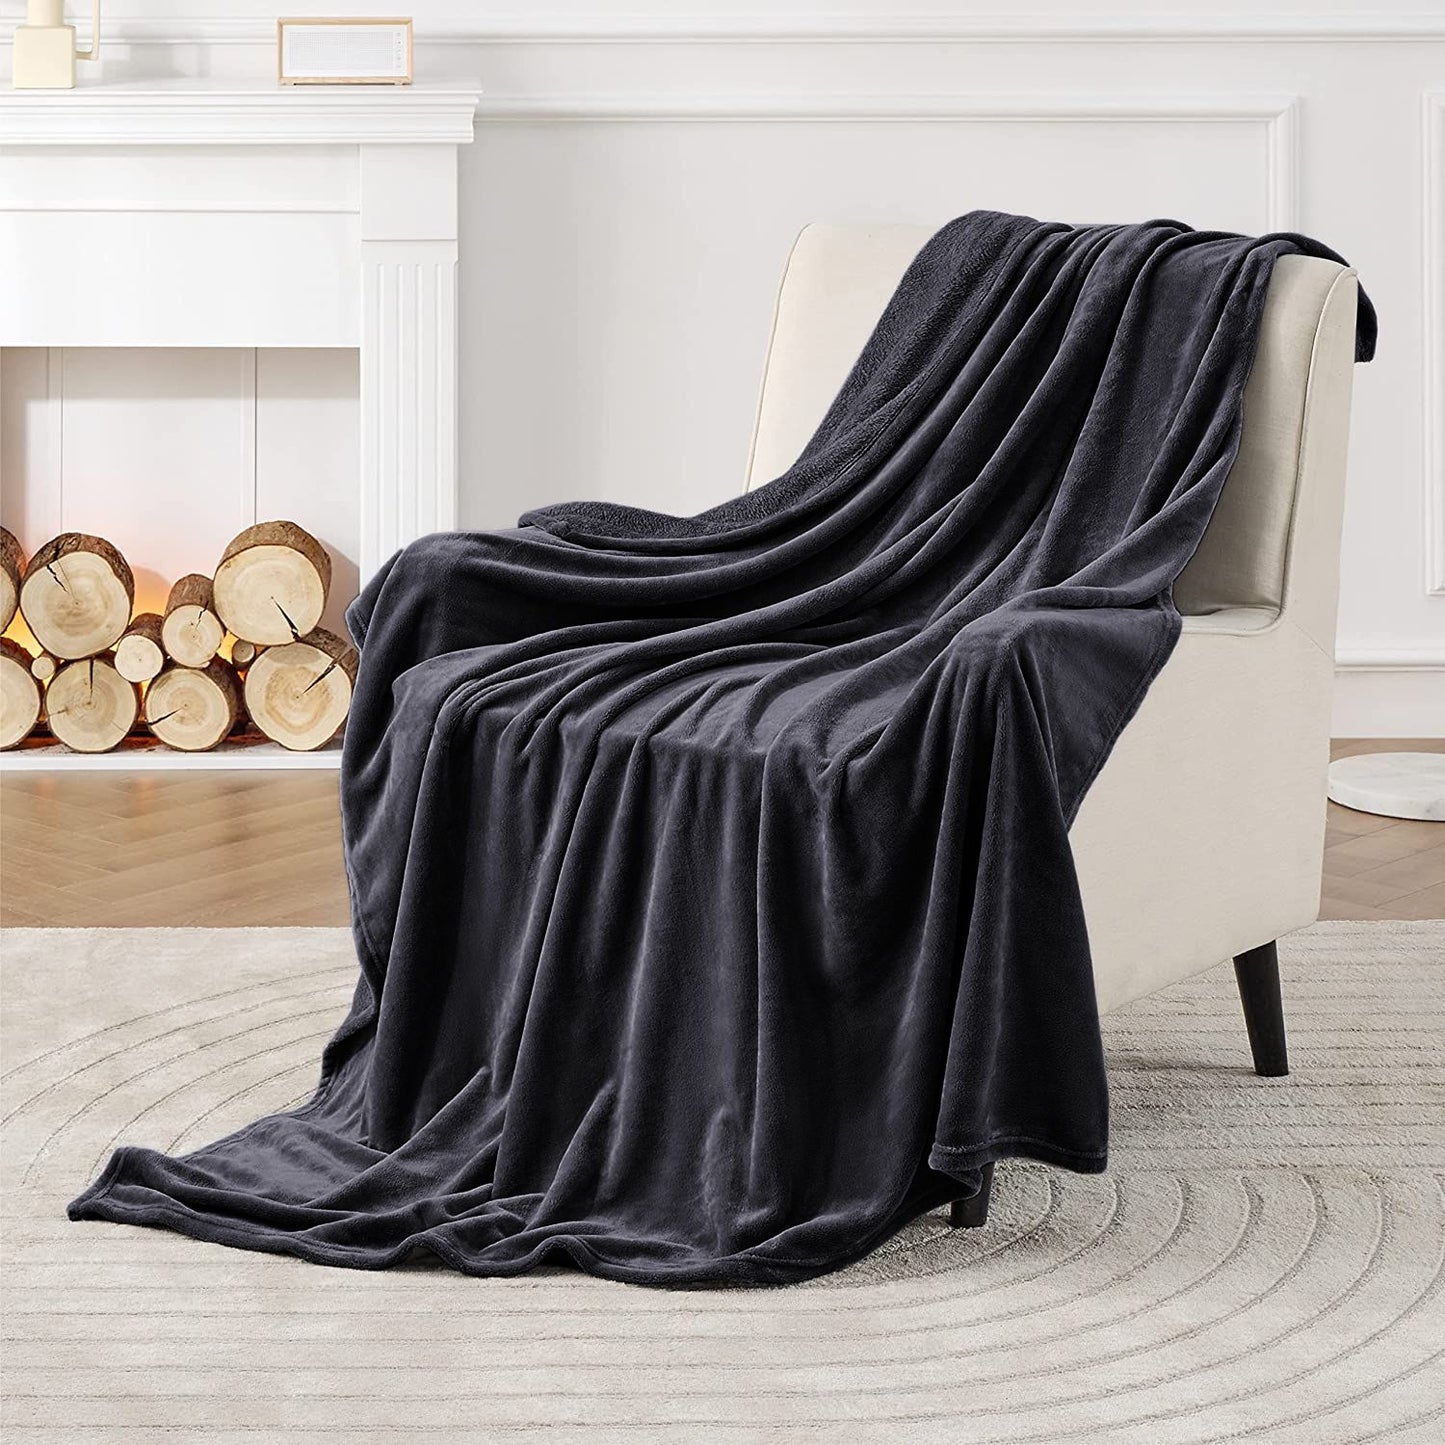 Fluffy Mink Fleece Throw Winter Blanket - Black